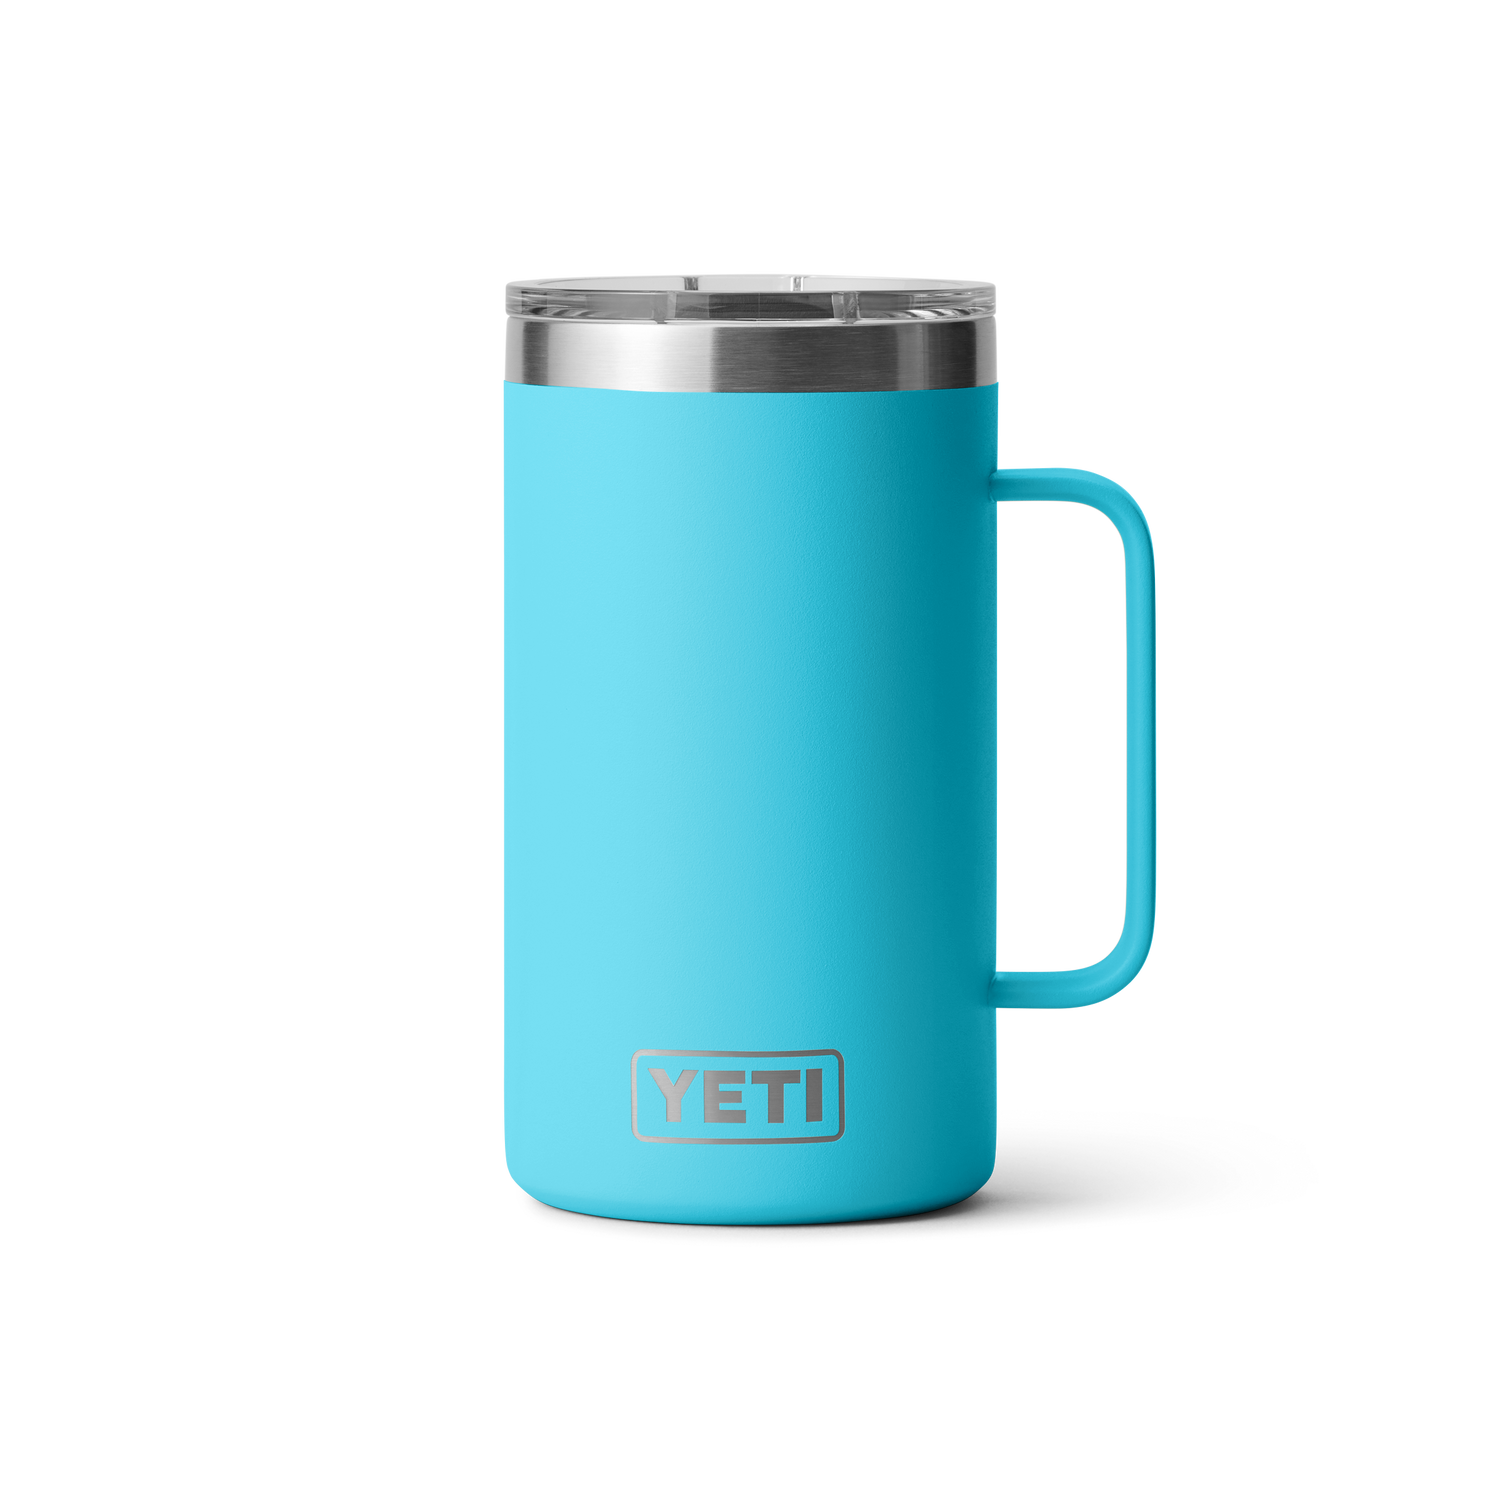 YETI - Meet the new Rambler 10 oz Stackable Mug. Its mission: keep